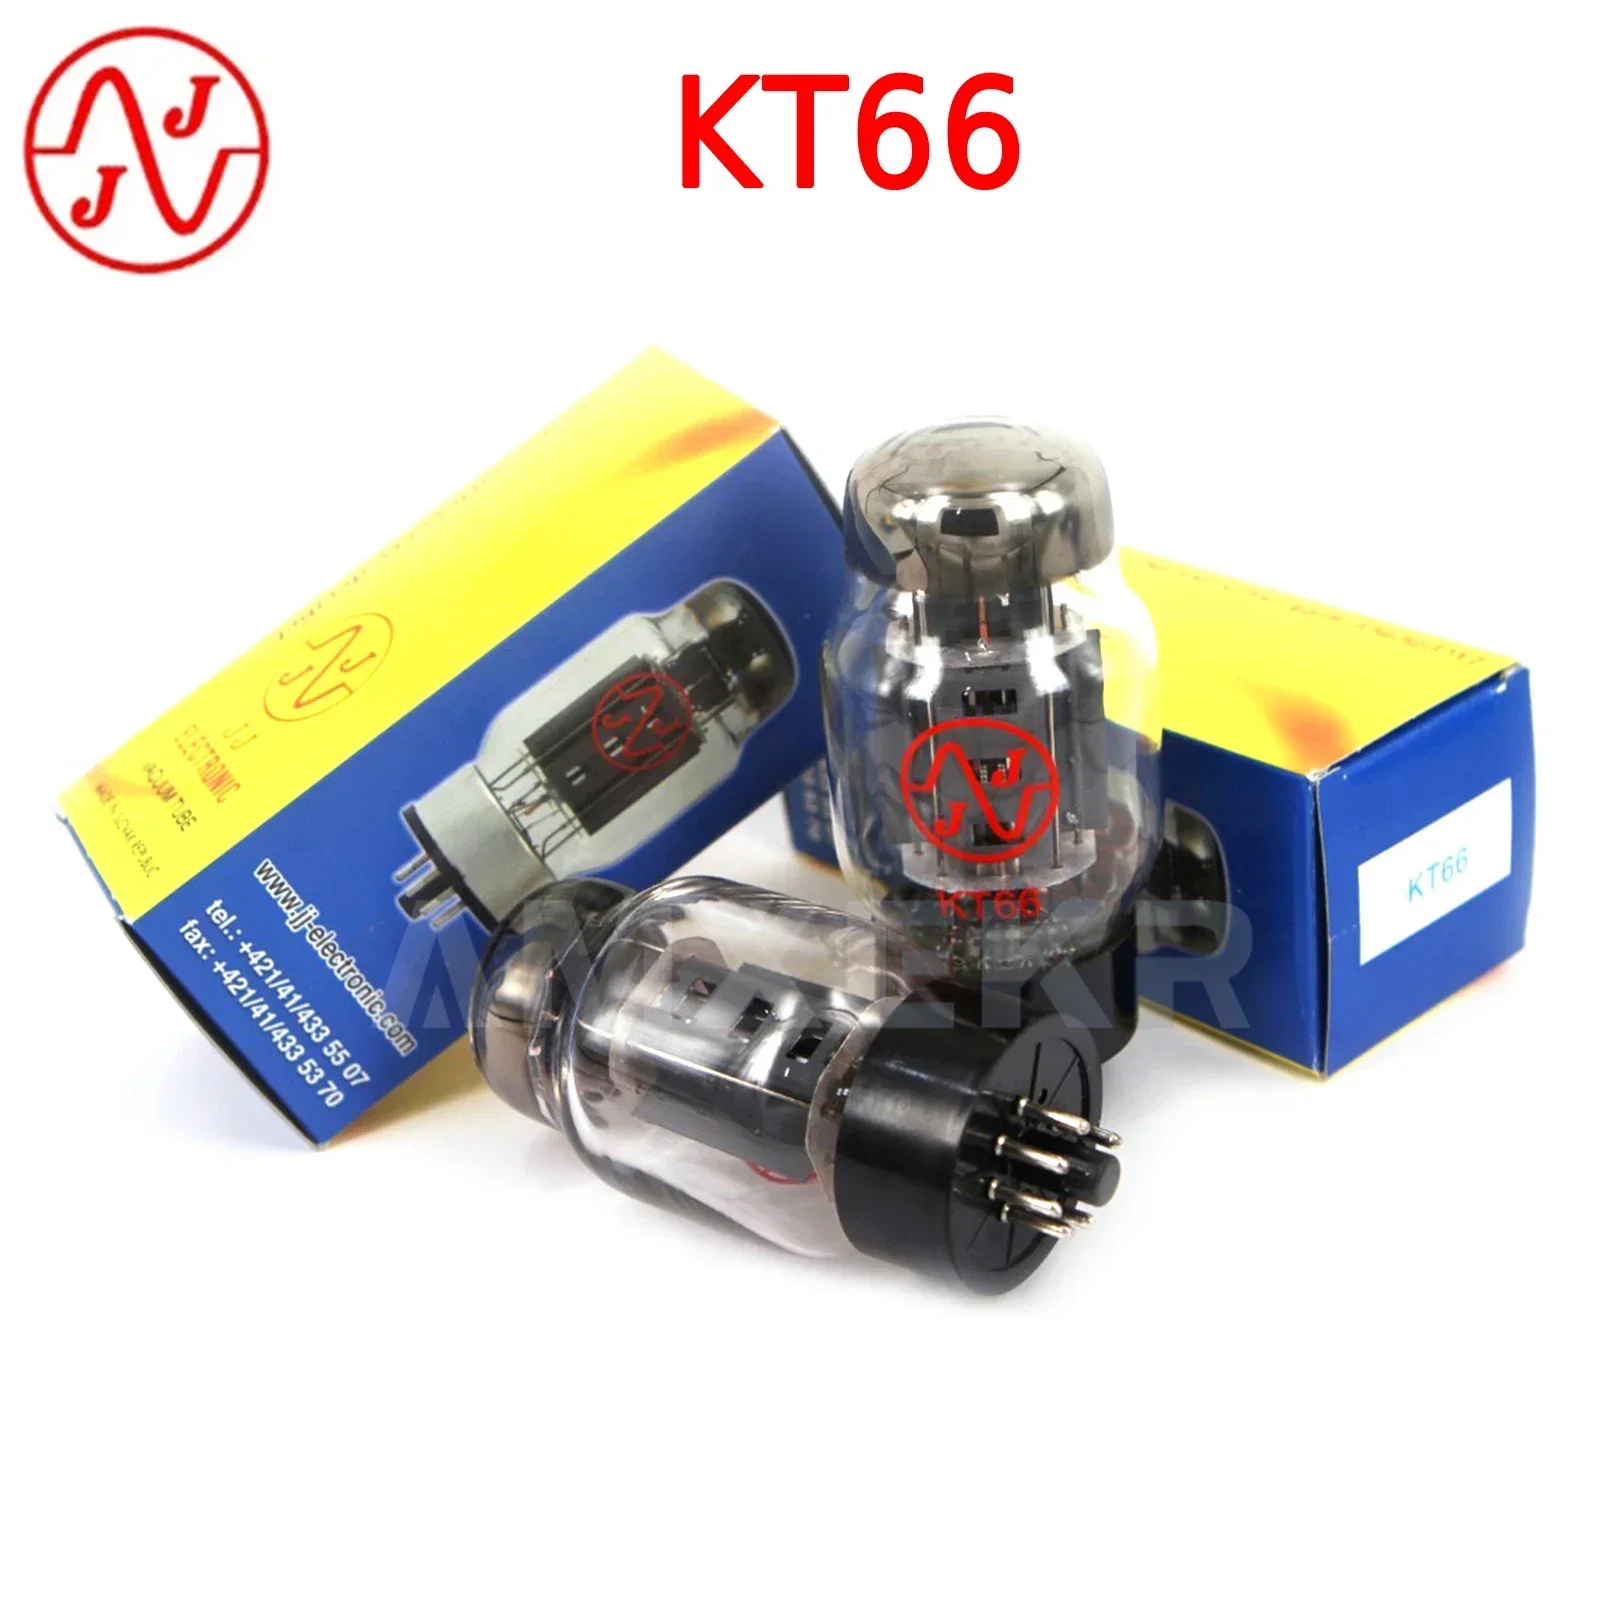 

JJ KT66 Vacuum Tube Replace KT88 EL34 6P3P 6L6 KT66 Electron Tube DIY Amplifier Kit HIFI Audio Valve Precision Matching